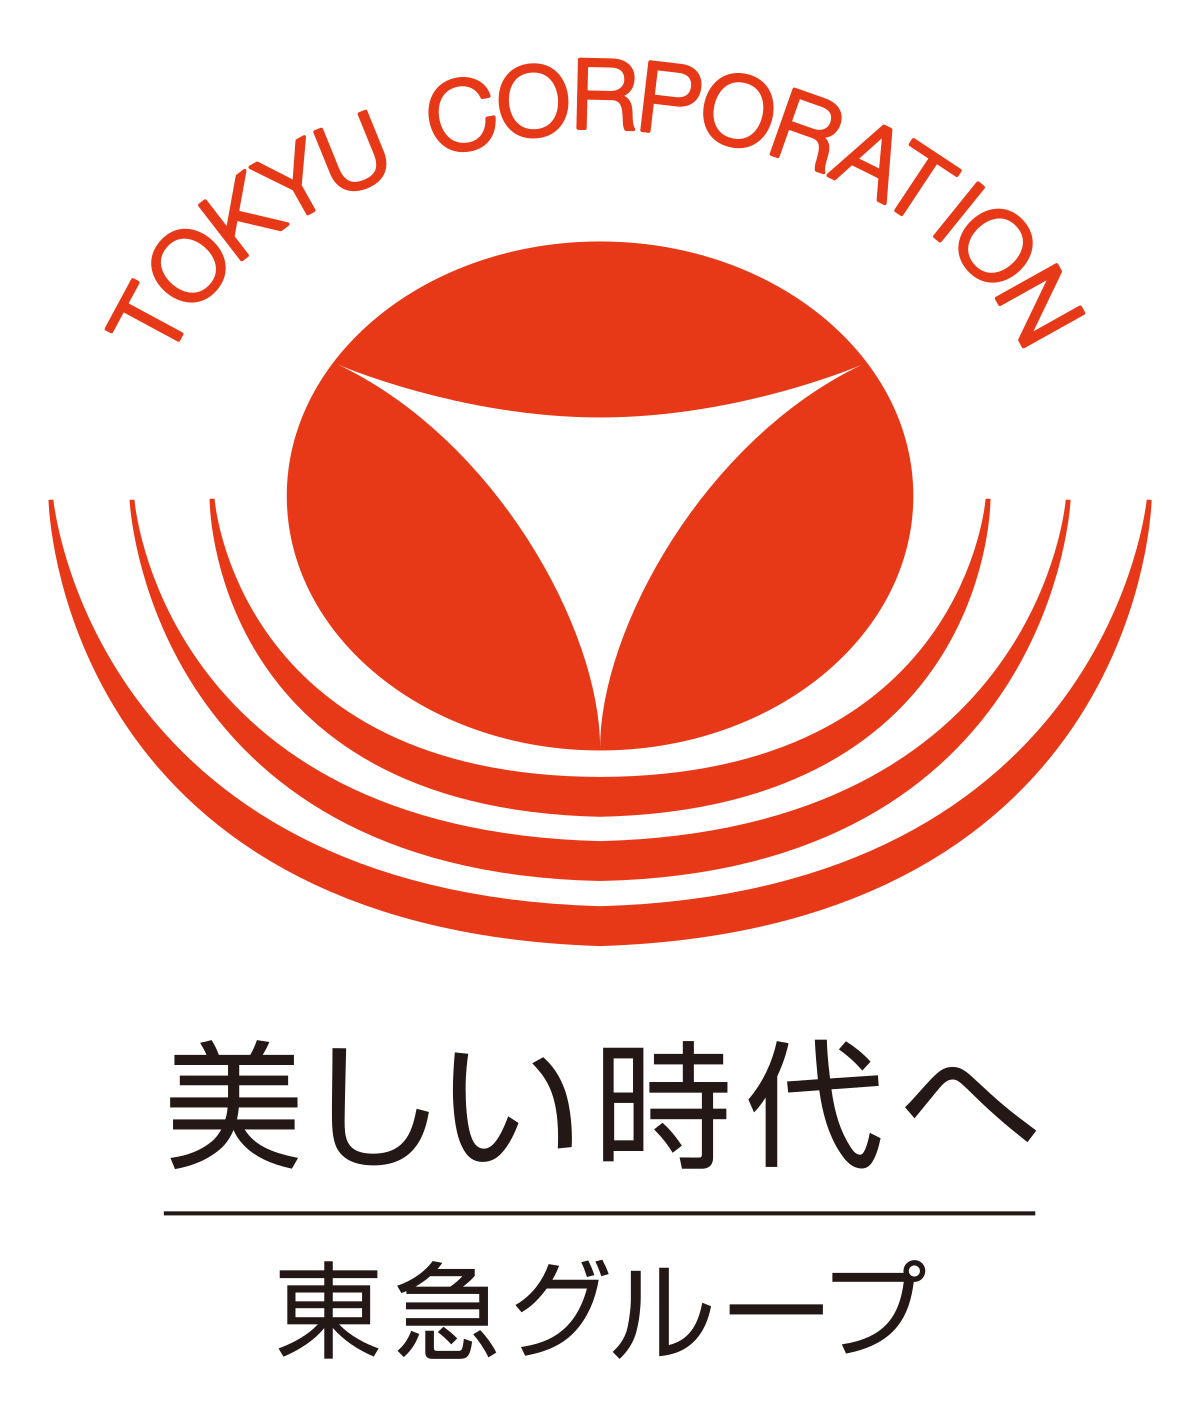 Tokyu Group - Wikipedia